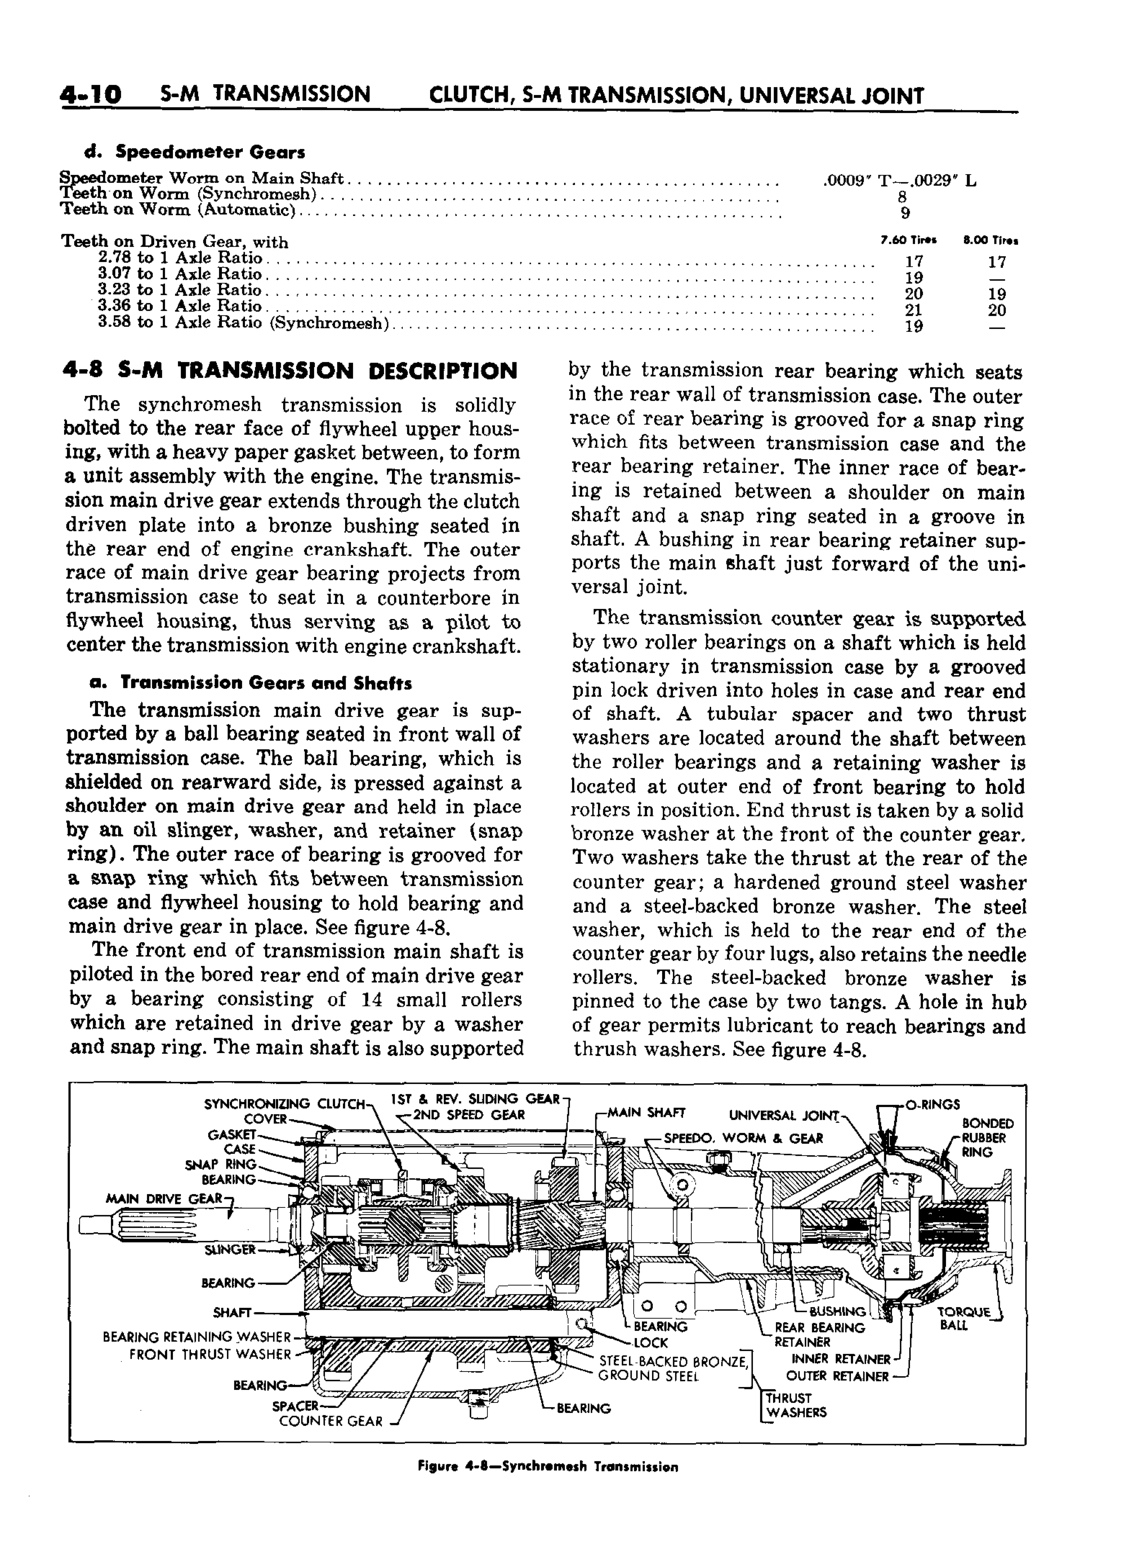 n_05 1959 Buick Shop Manual - Clutch & Man Trans-010-010.jpg